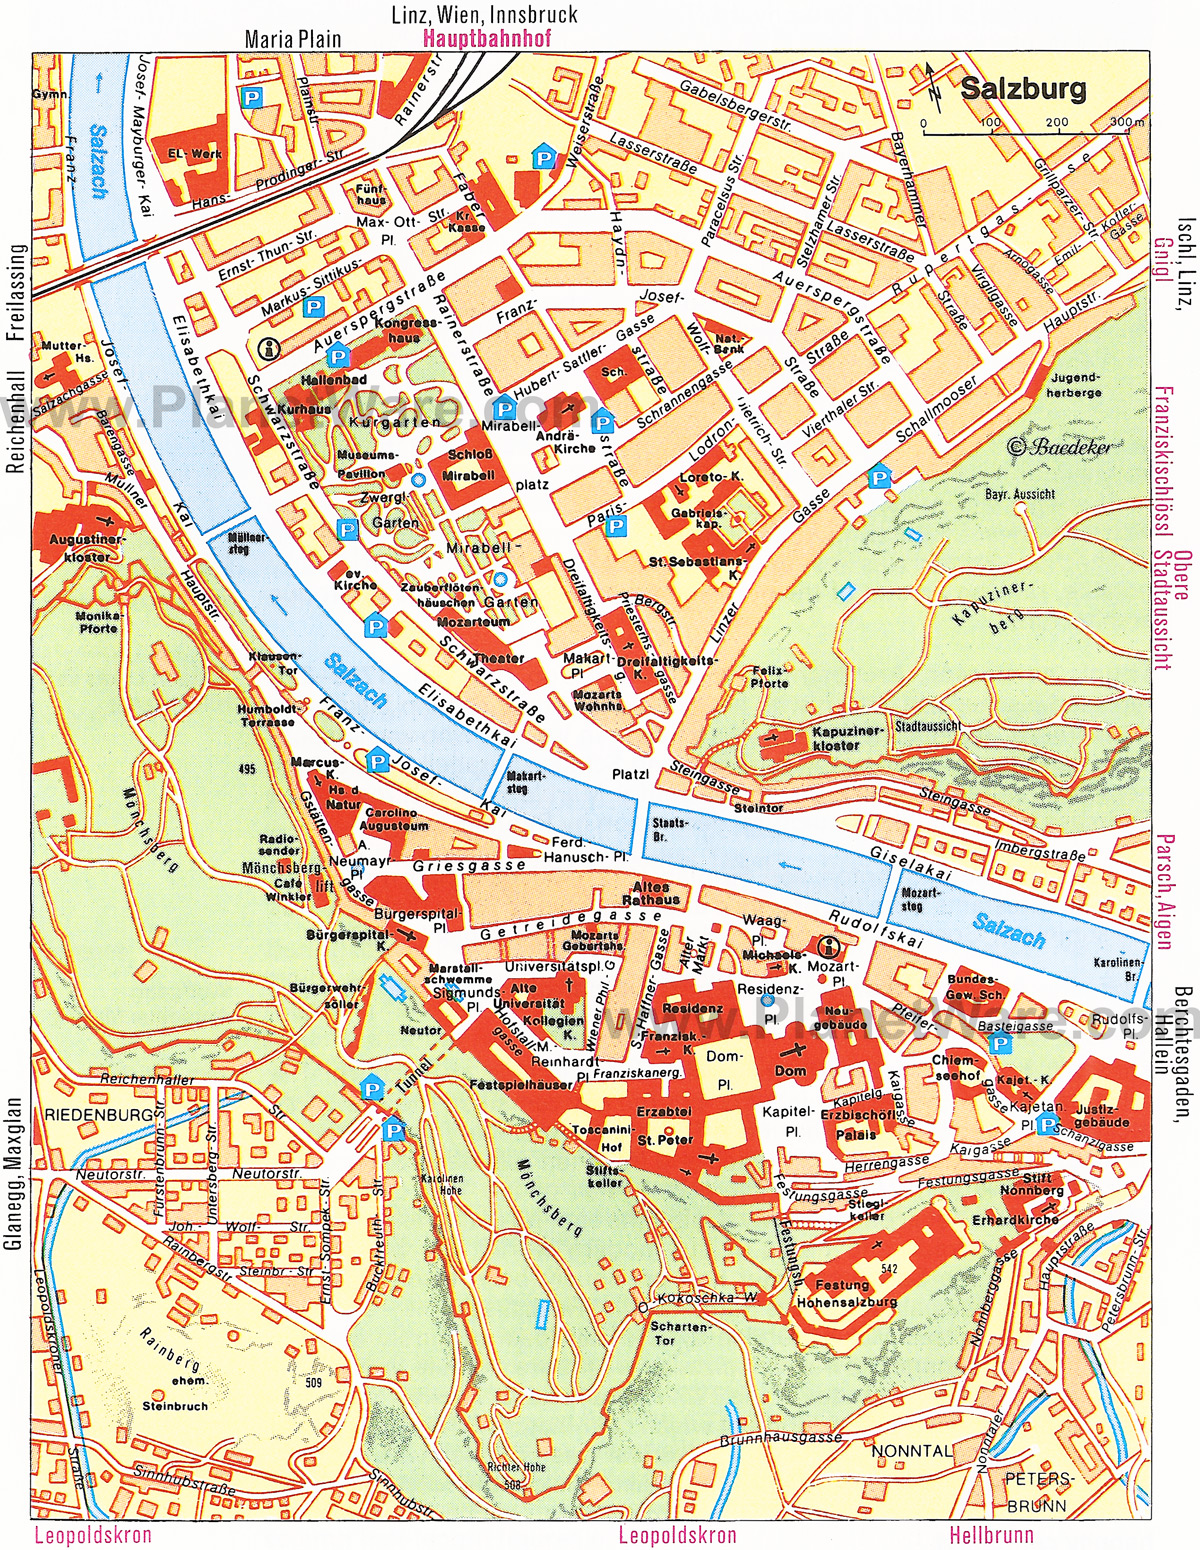 http://www.orangesmile.com/destinations/img/salzburg-map-big.jpg